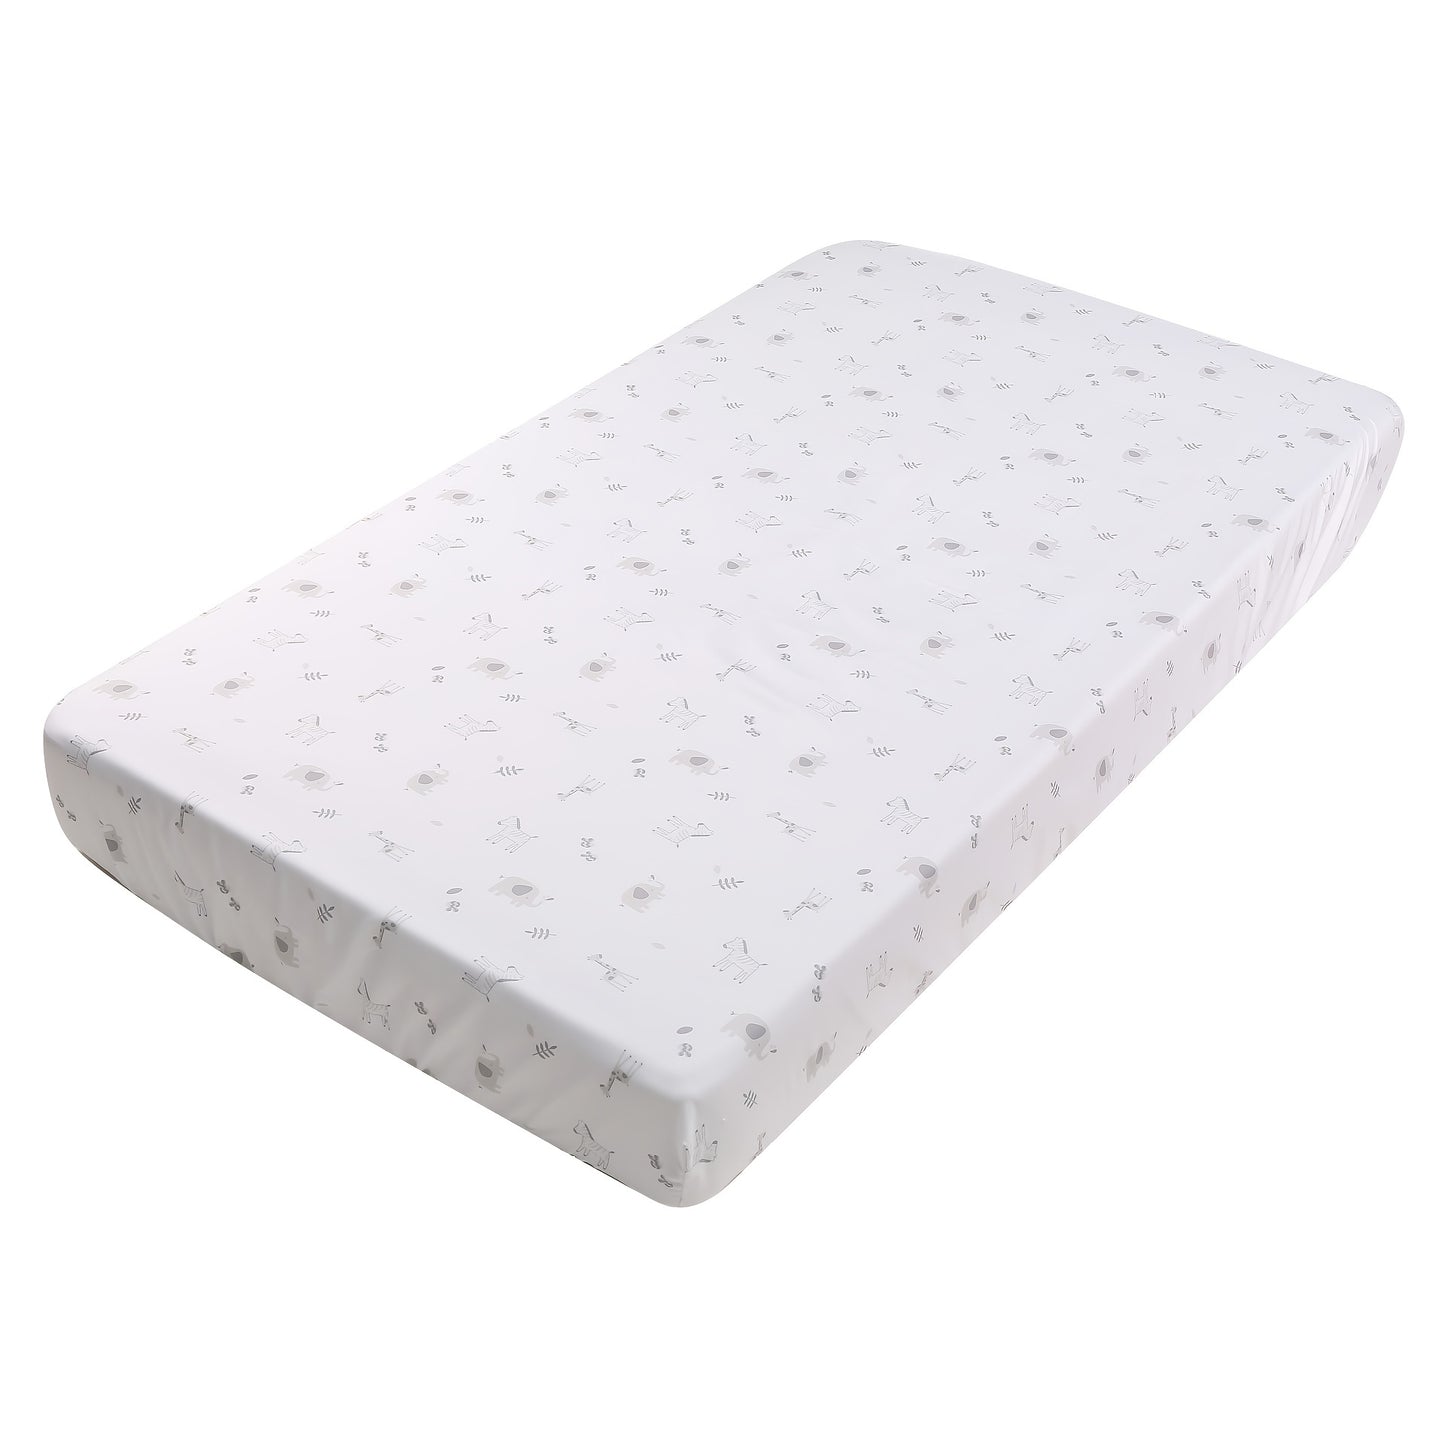 3pcs\u002Fset Giraffe Zebra Print Crib Bedding Set, Baby Bedding Set For Girl Boy Baby Crib Bedroom(1*Crib Skirt + 1*Quilt + 1*Fitted Sheet)